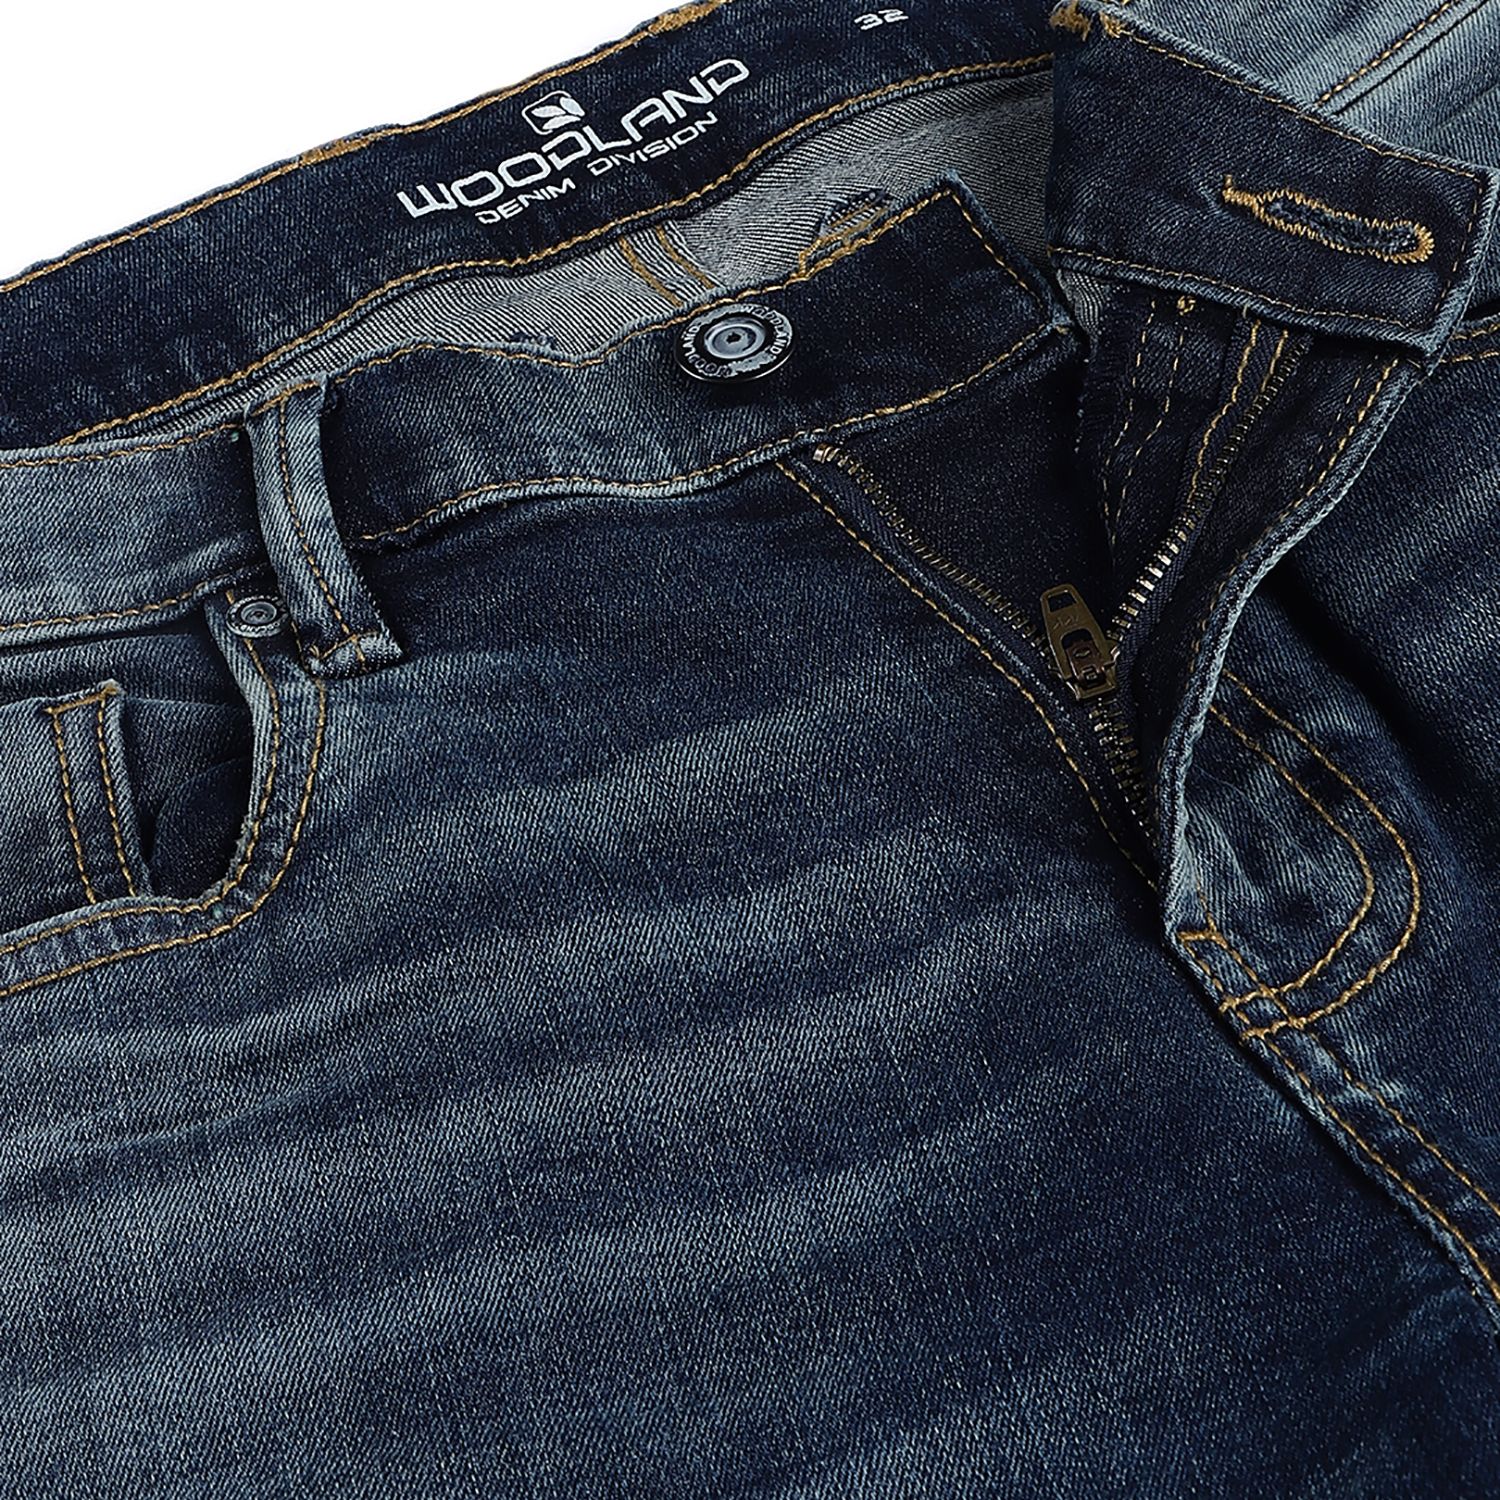 Details 195+ woodland denim jeans latest